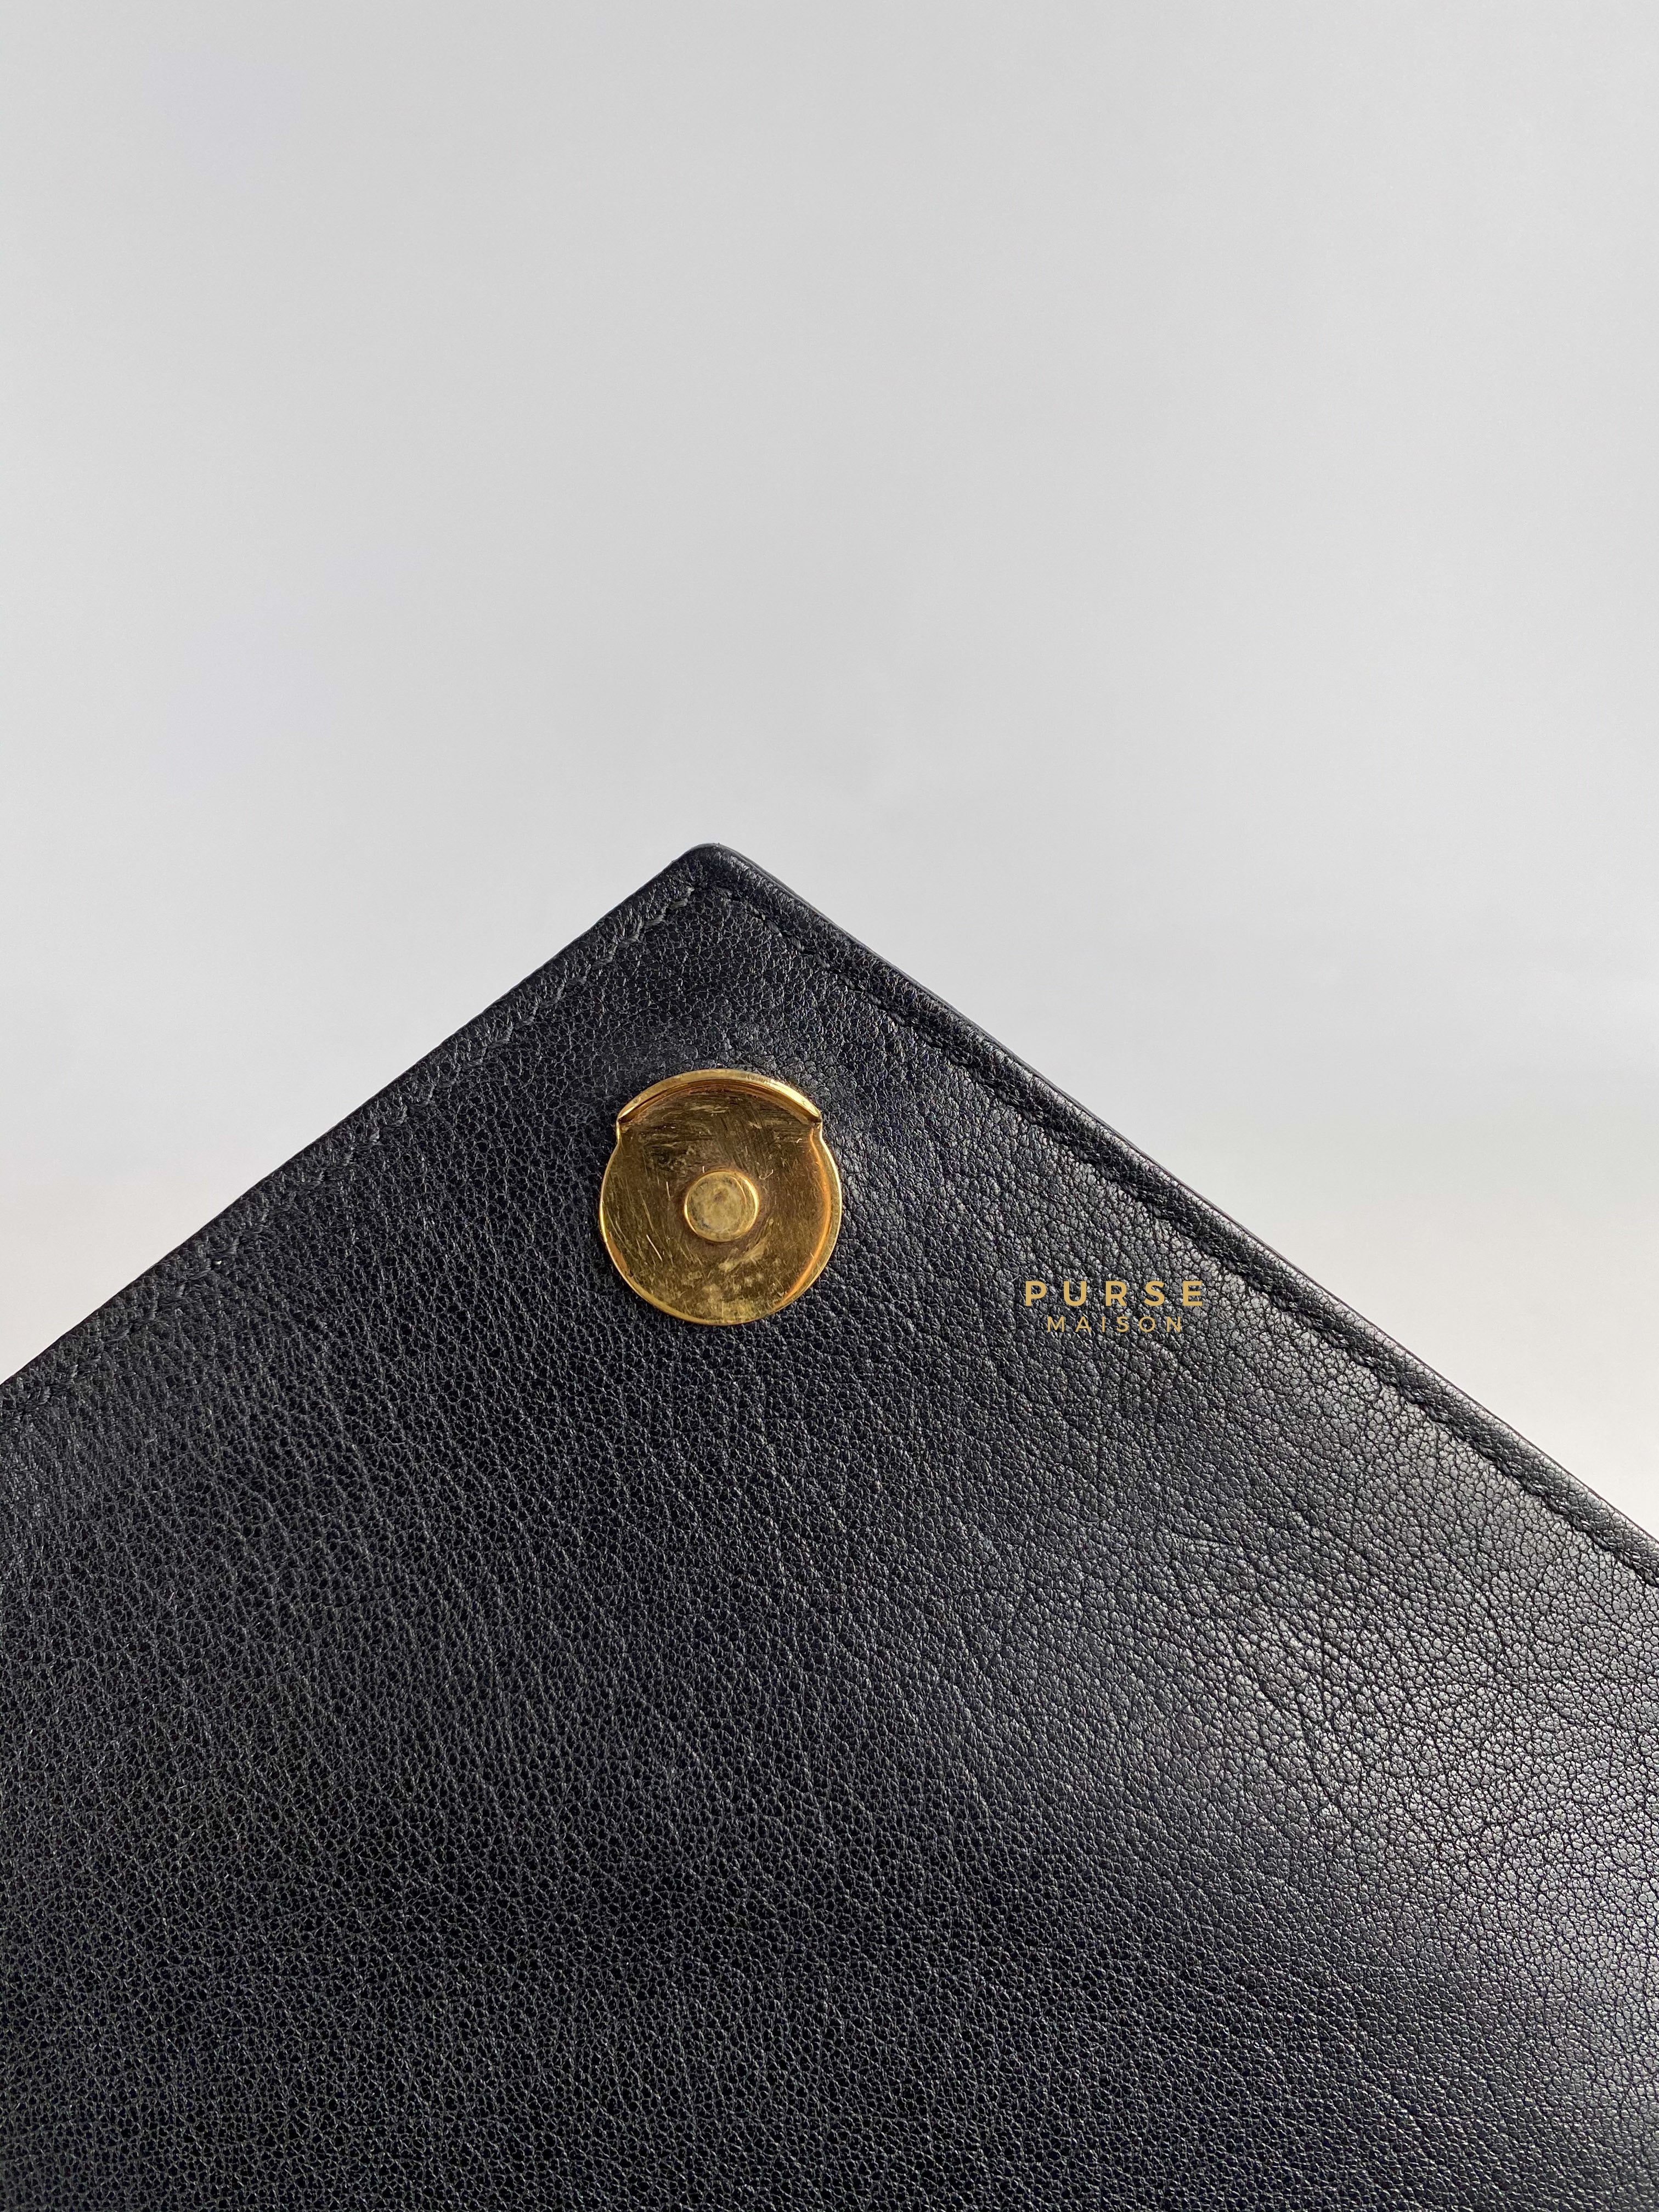 YSL College Medium in Black Sheepskin and Aged Gold Hardware | Purse Maison Luxury Bags Shop